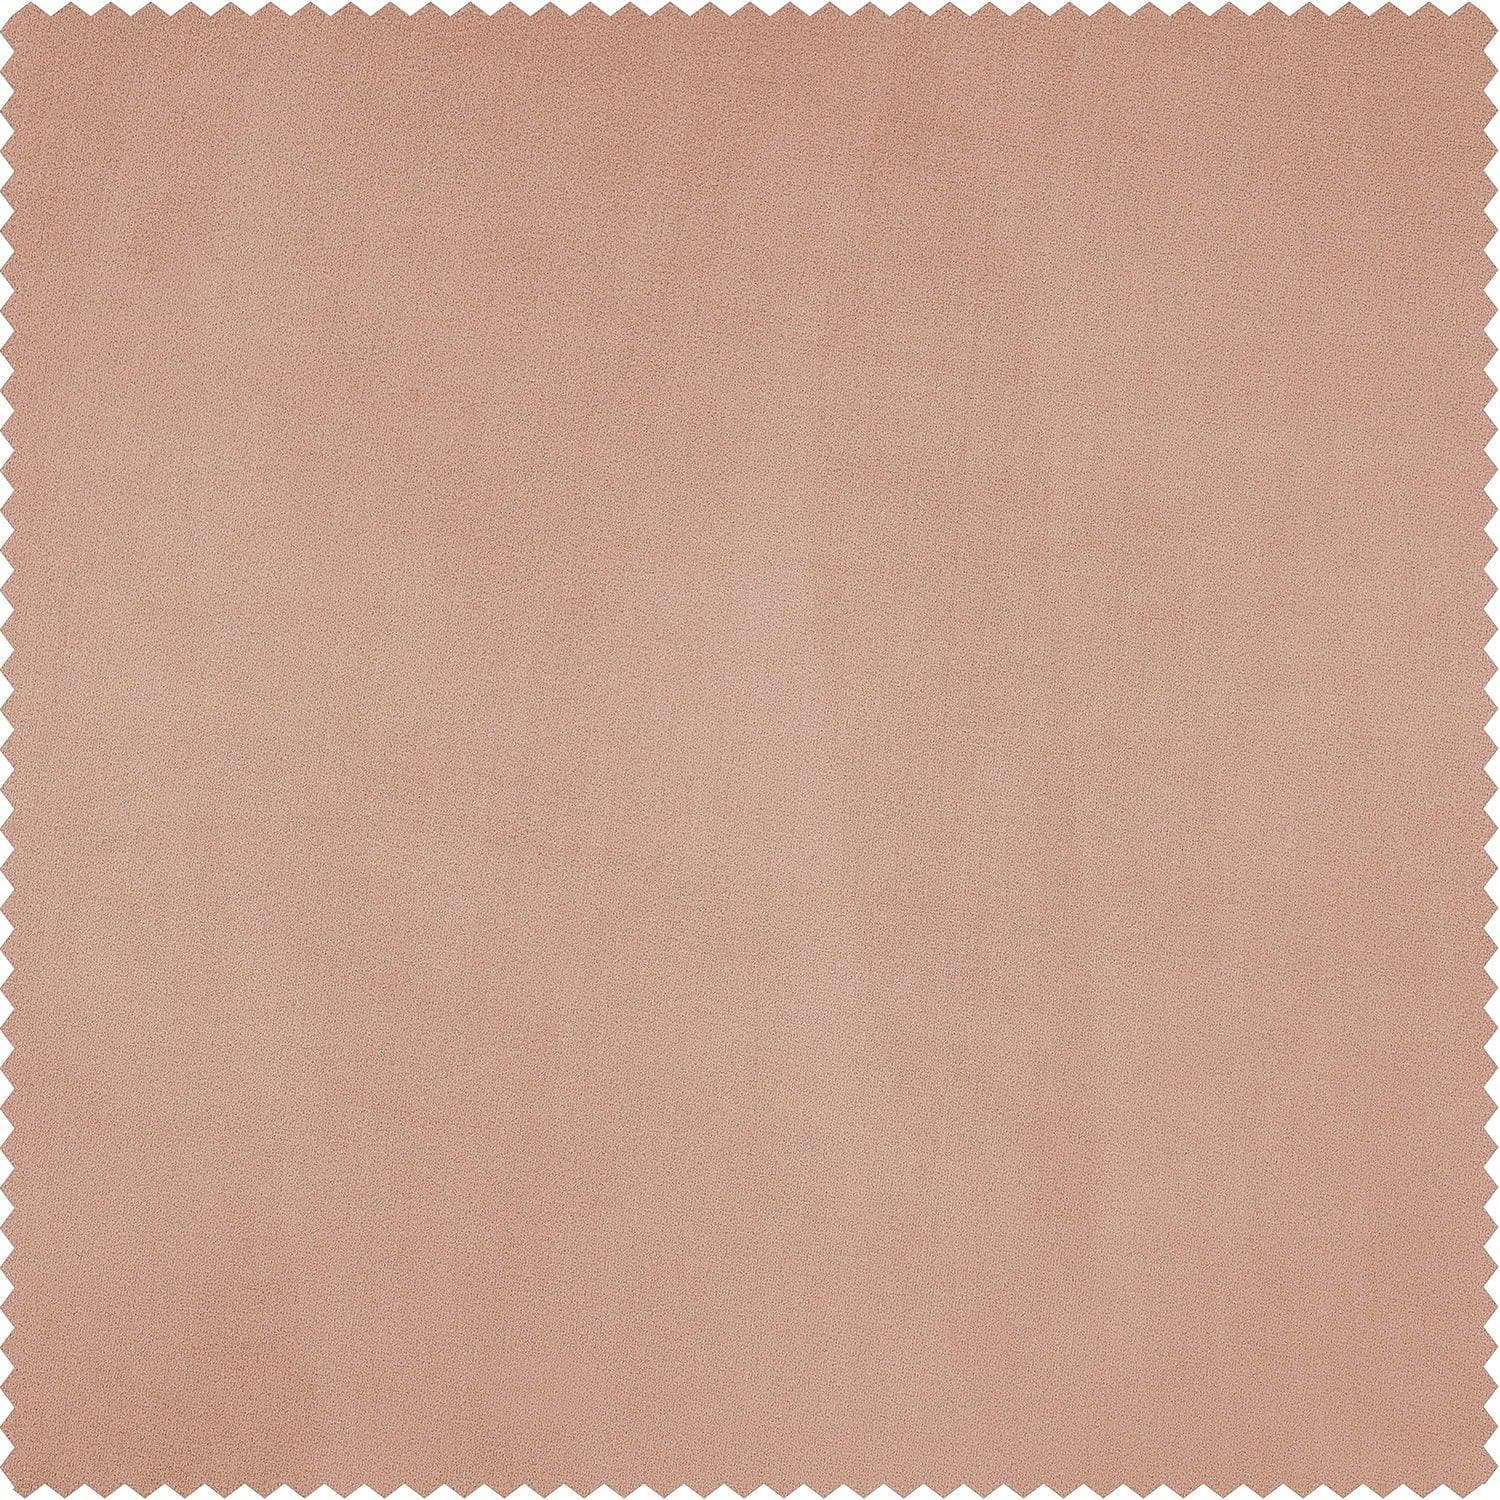 Peach Blossom Heritage Plush Velvet Cushion Covers - Pair